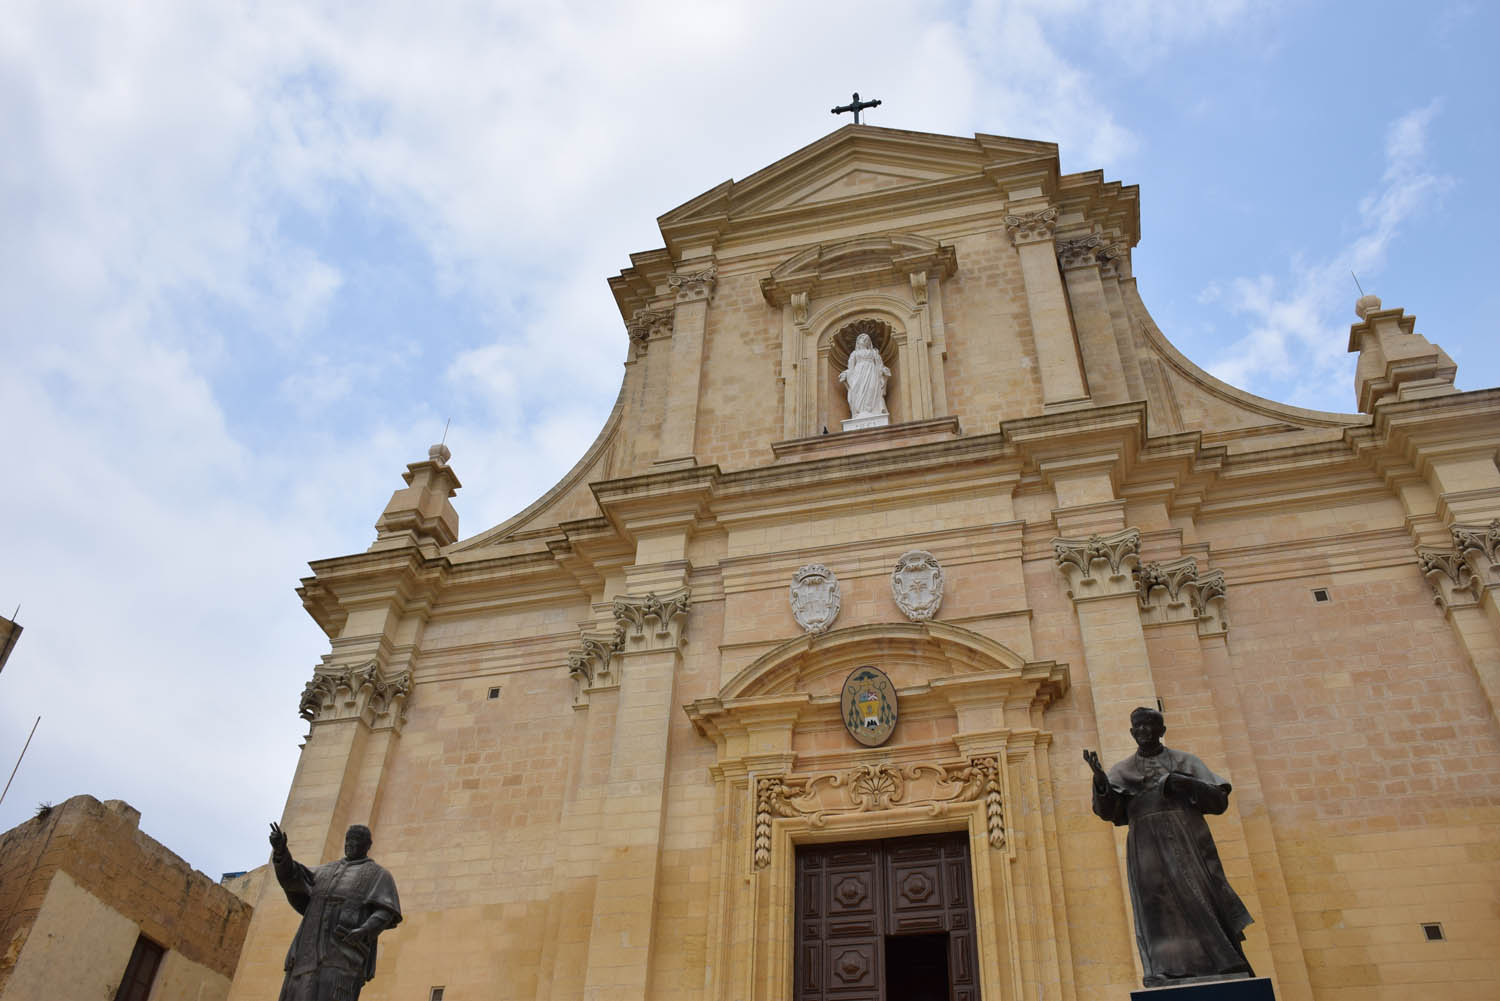 One of Malta's 365 churches - Gozo Cathedral in Cittadella